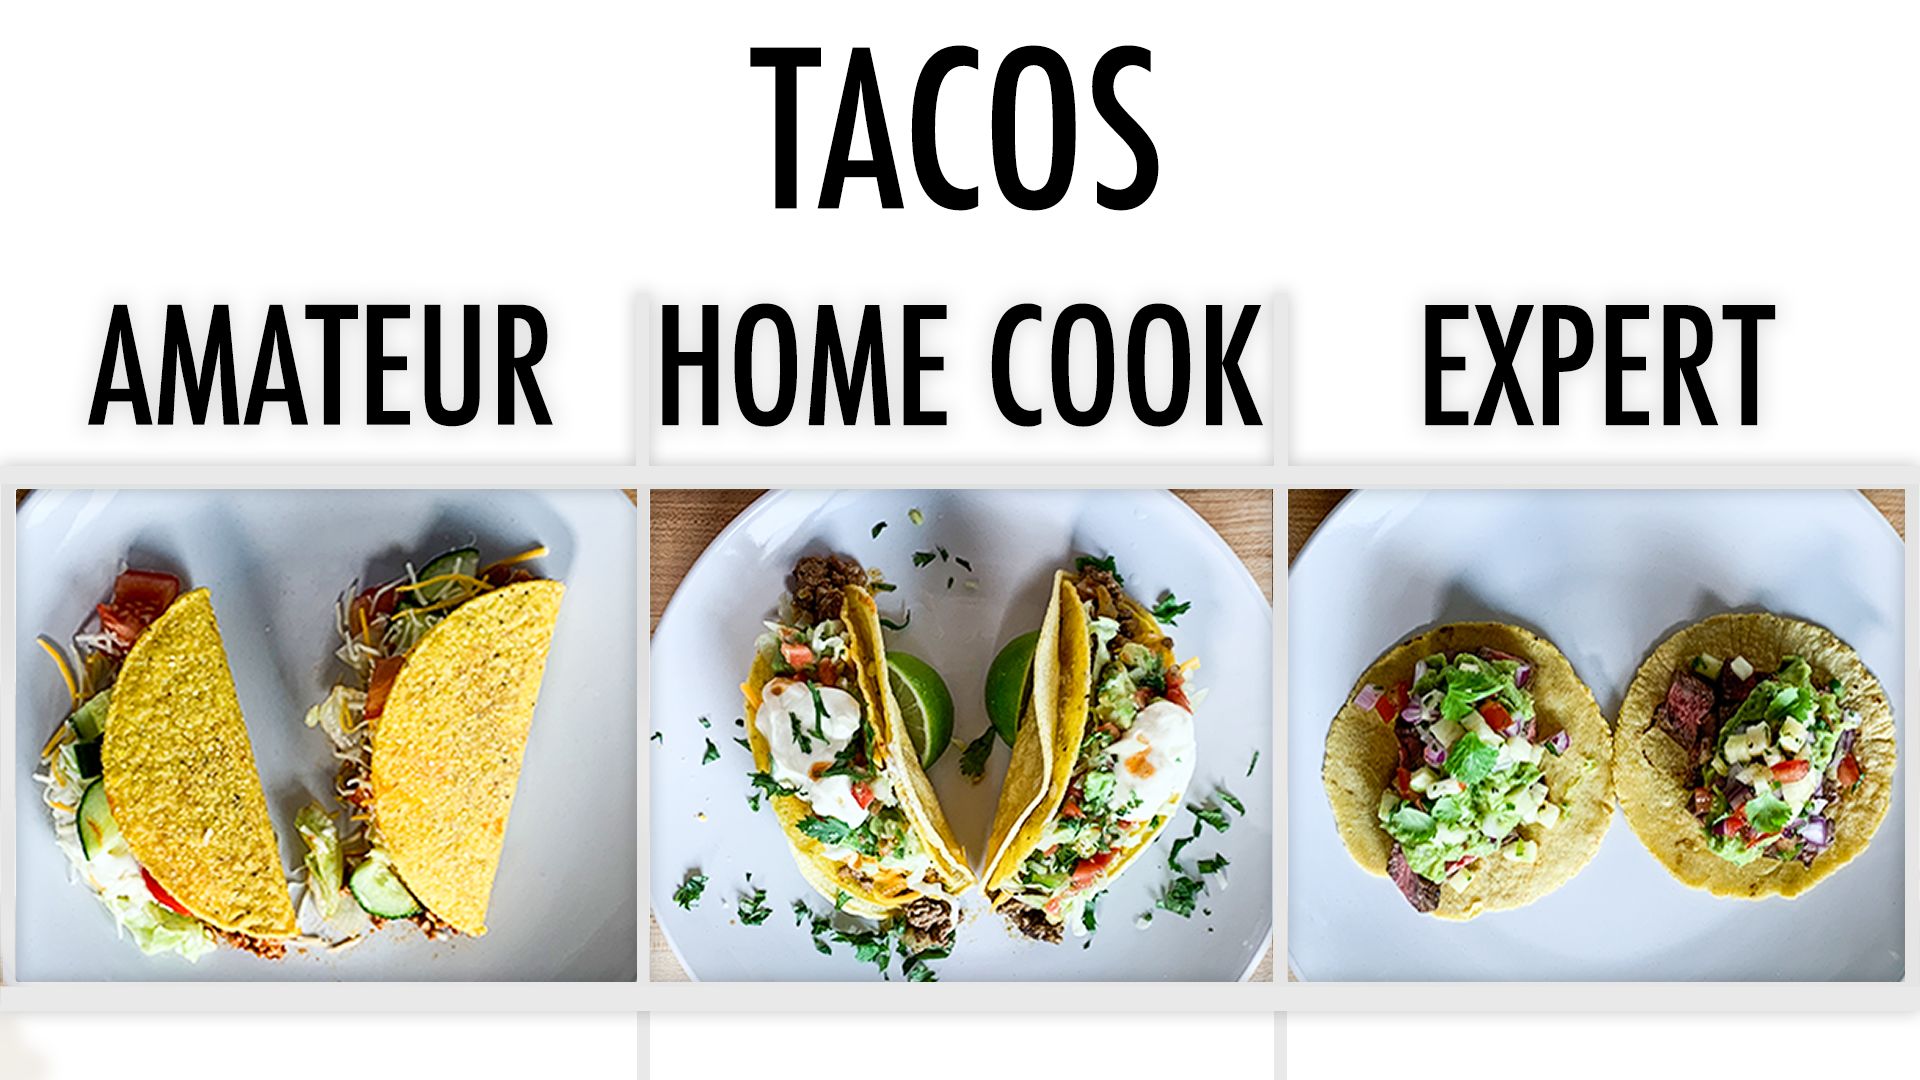 Tacos Amateur to Food Scientist picture